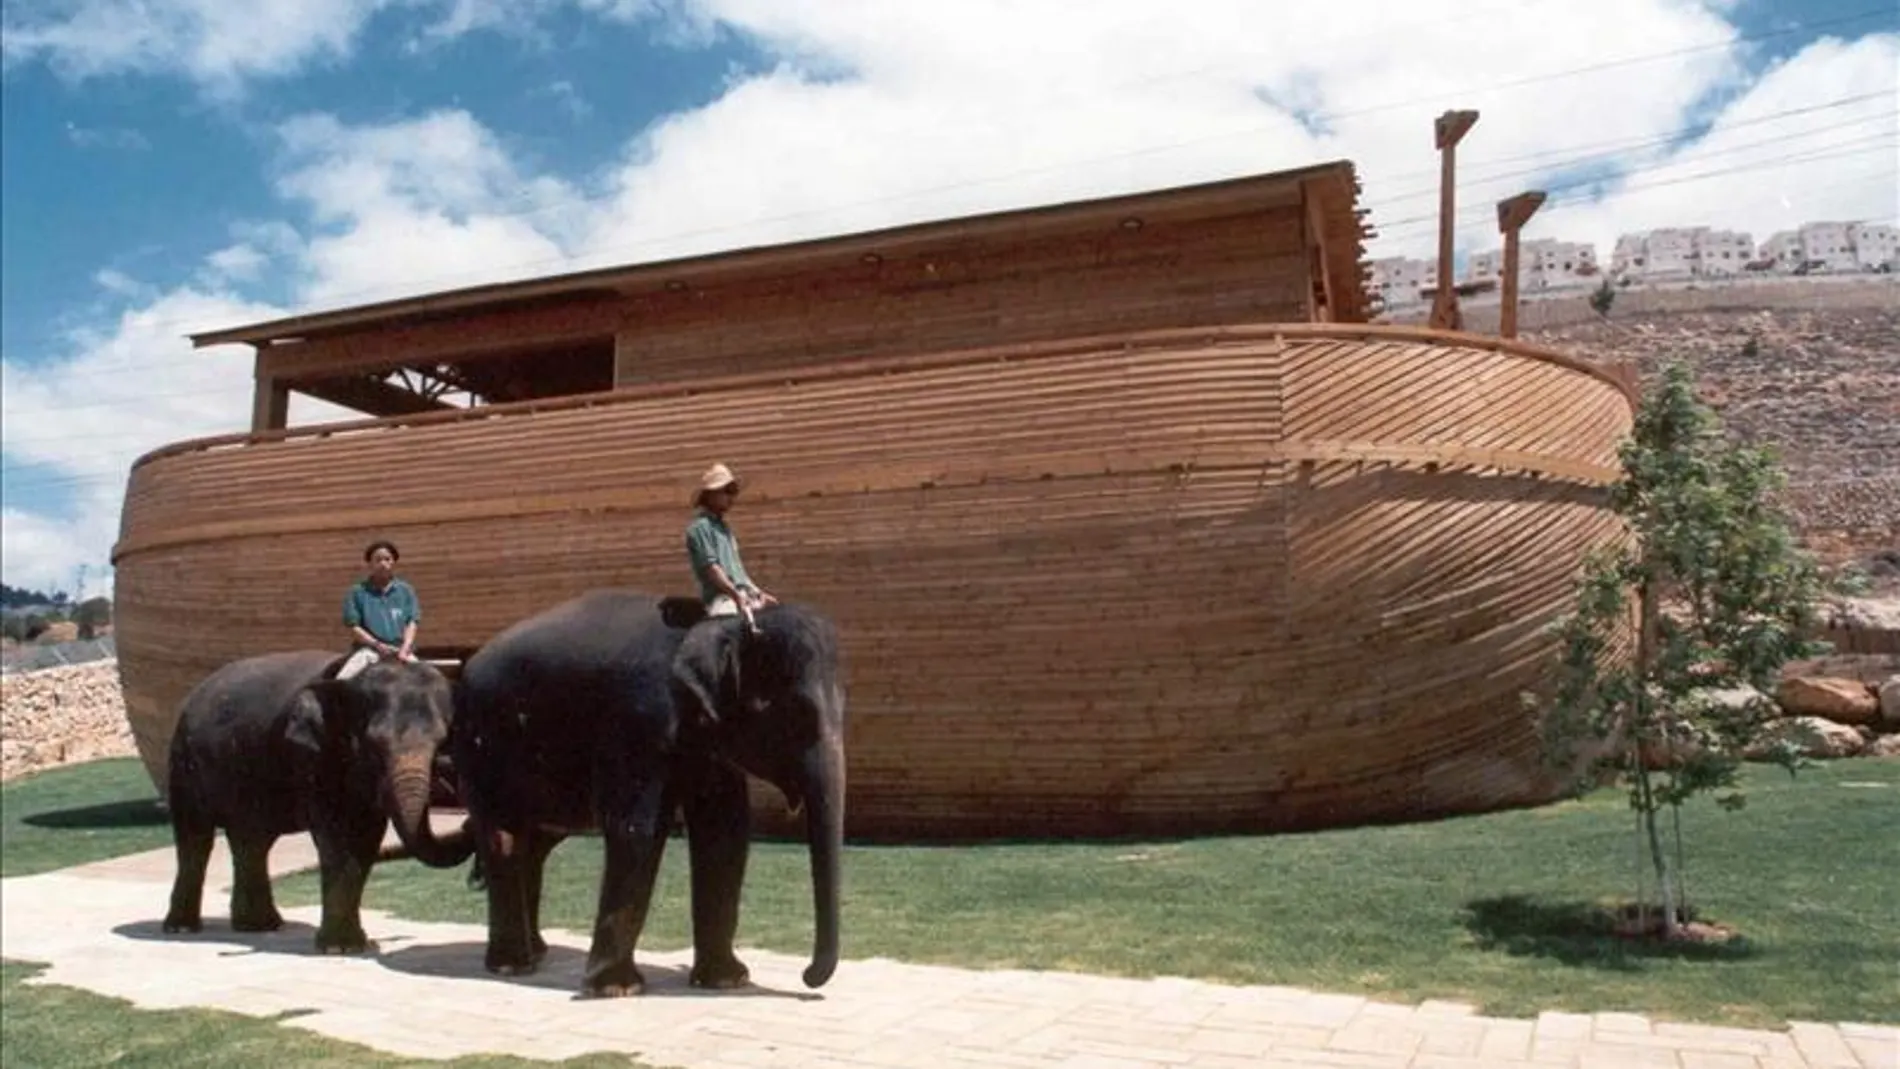 Elefantes asiáticos junto a un Arca de Noé de madera